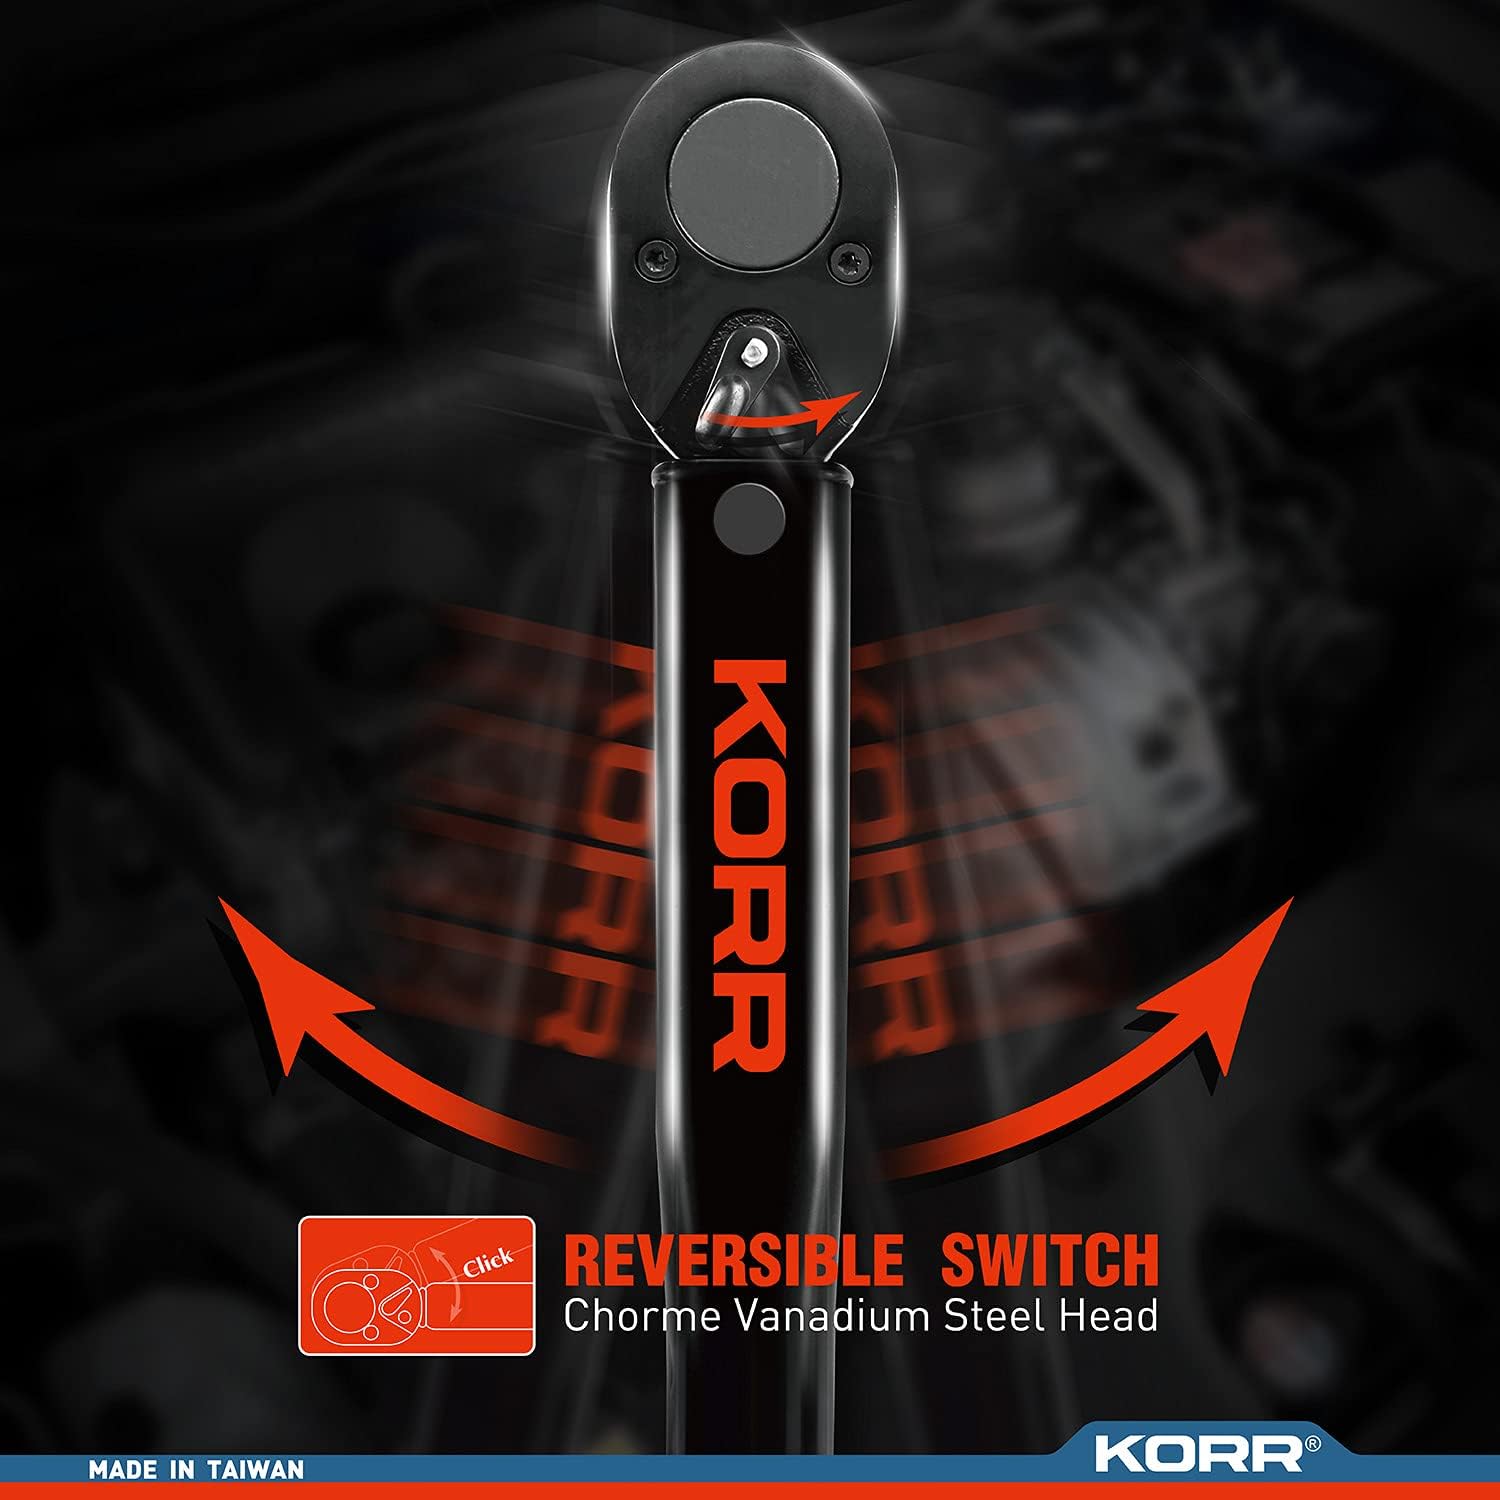 korr Tools KTW002 3/8-Inch Drive Click Torque Wrench (5-80 ft.-lb.)